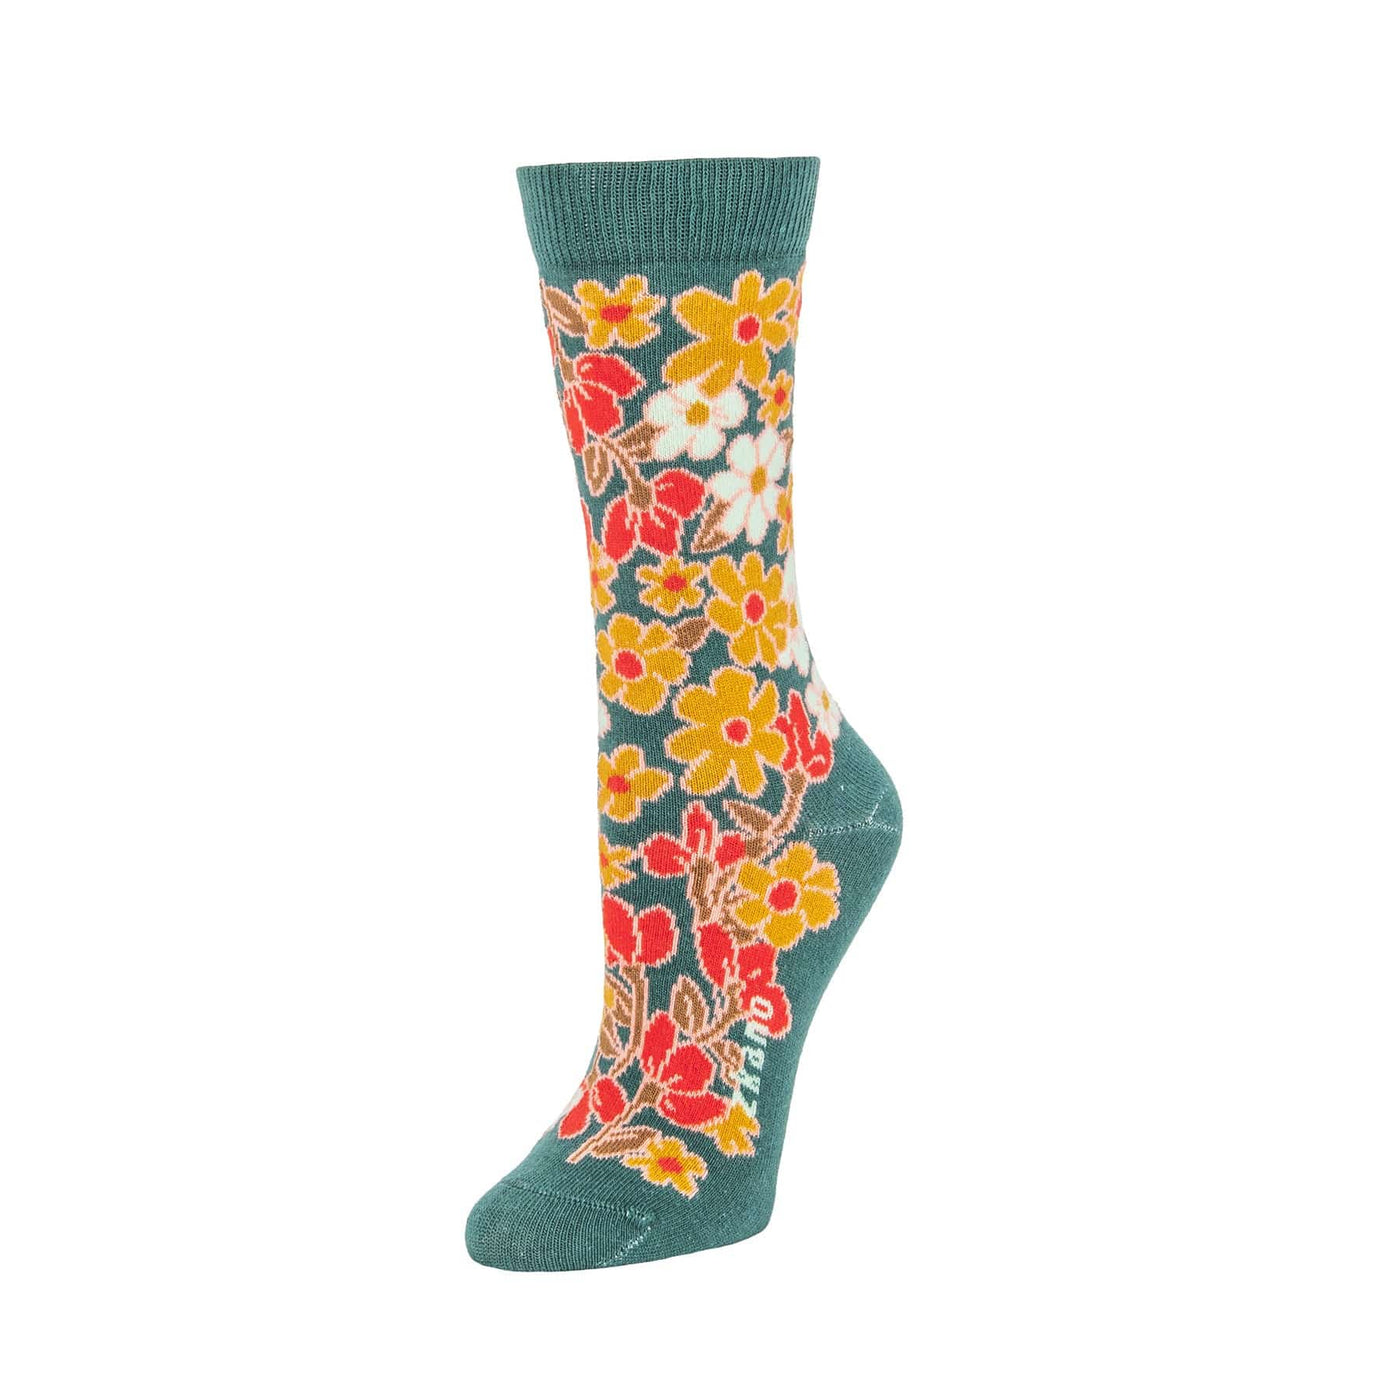 Zkano Crew Medium Wildflowers - Organic Cotton Crew Socks - Harvest Gold organic-socks-made-in-usa